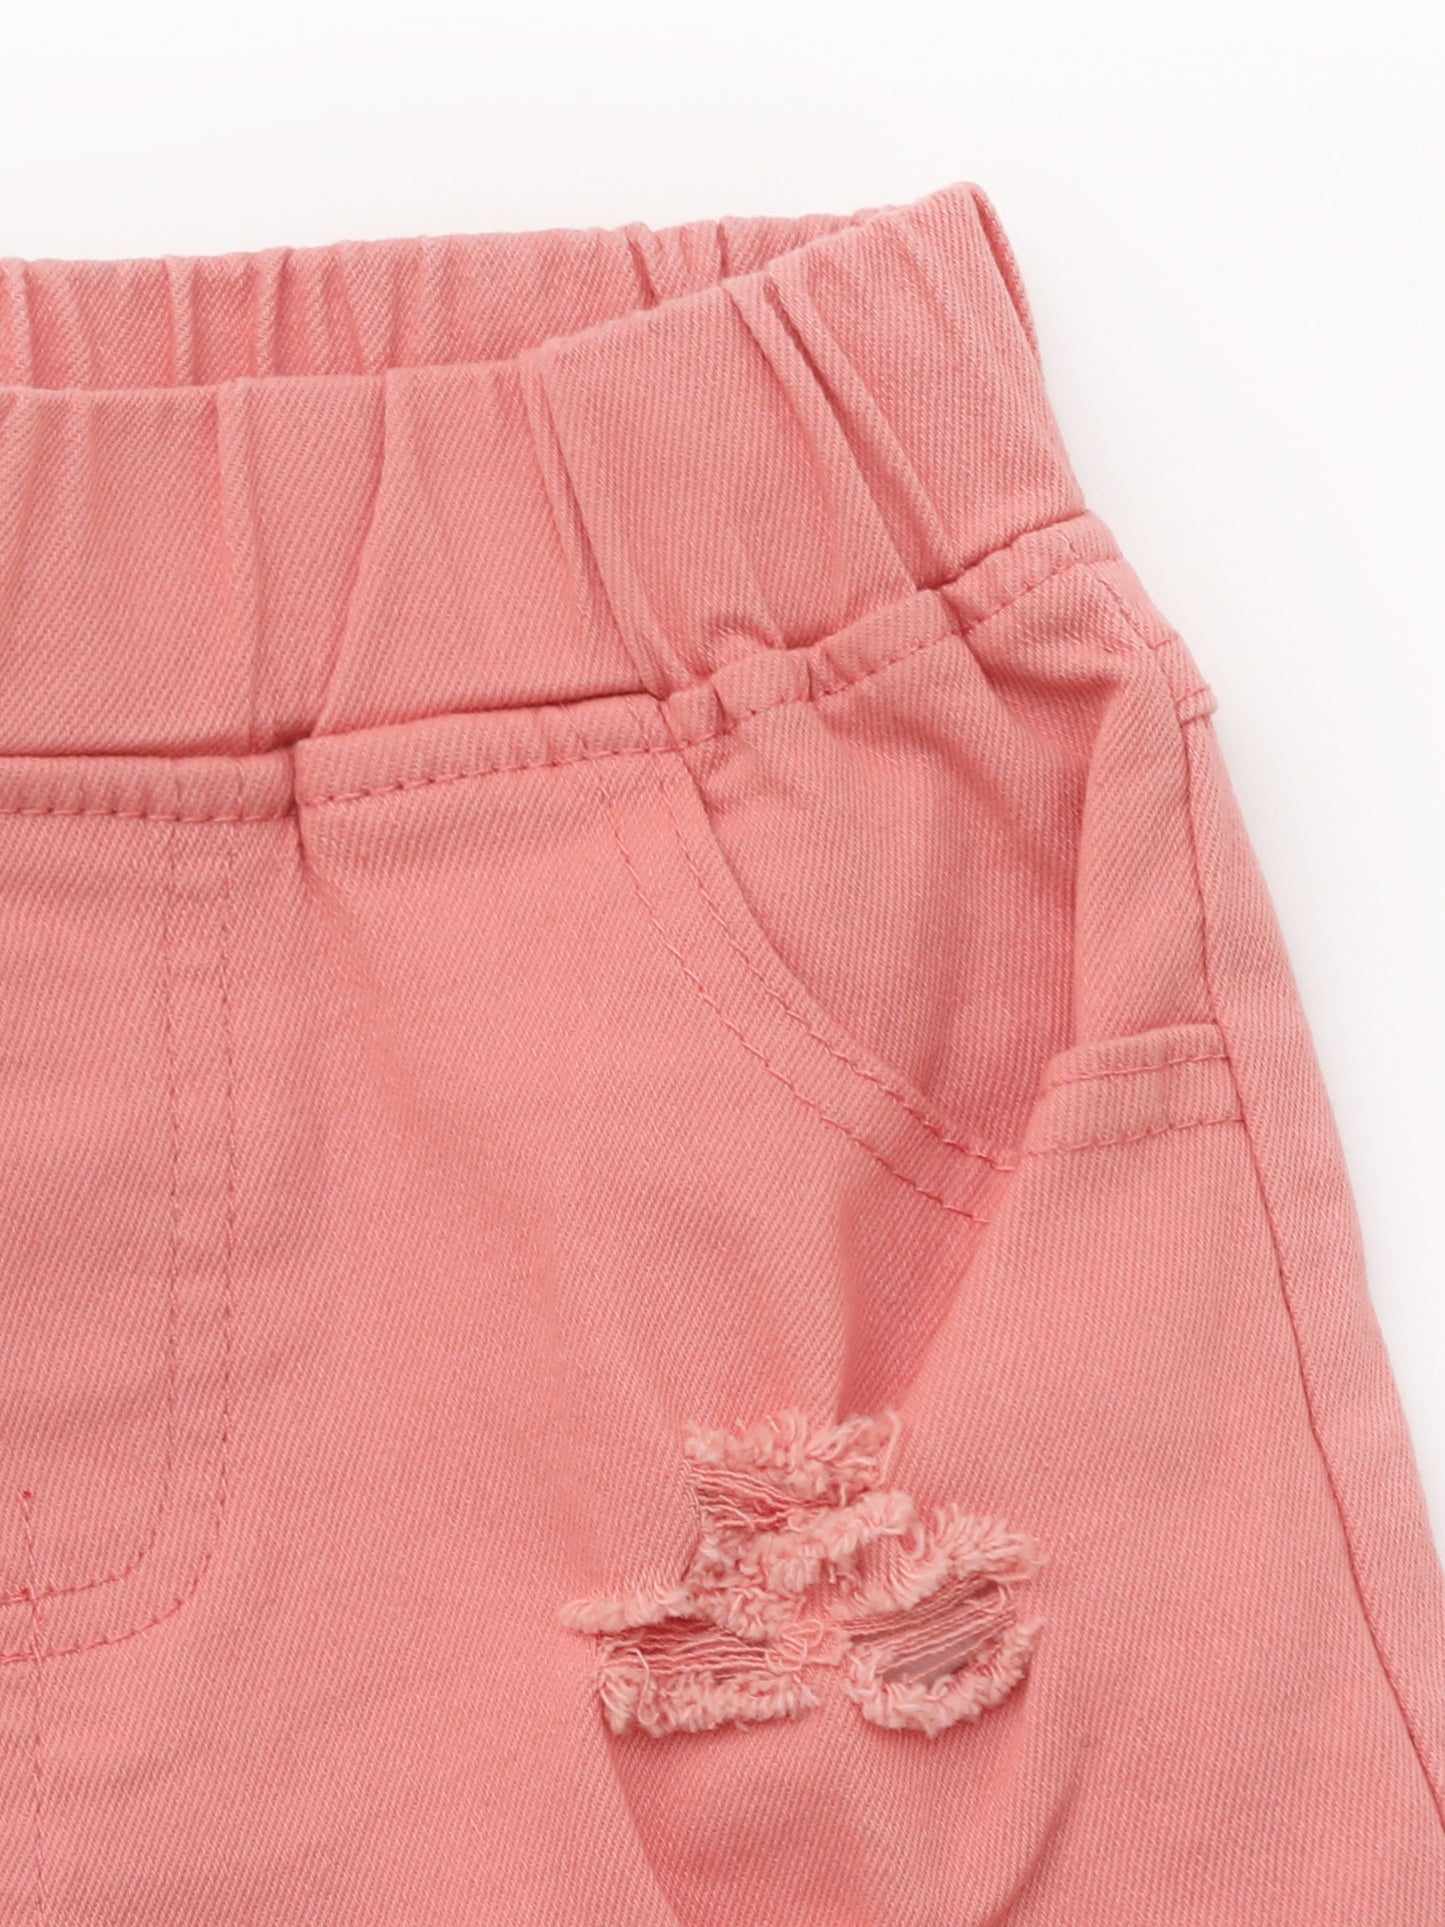 Girls Distressed Pink Denim Shorts